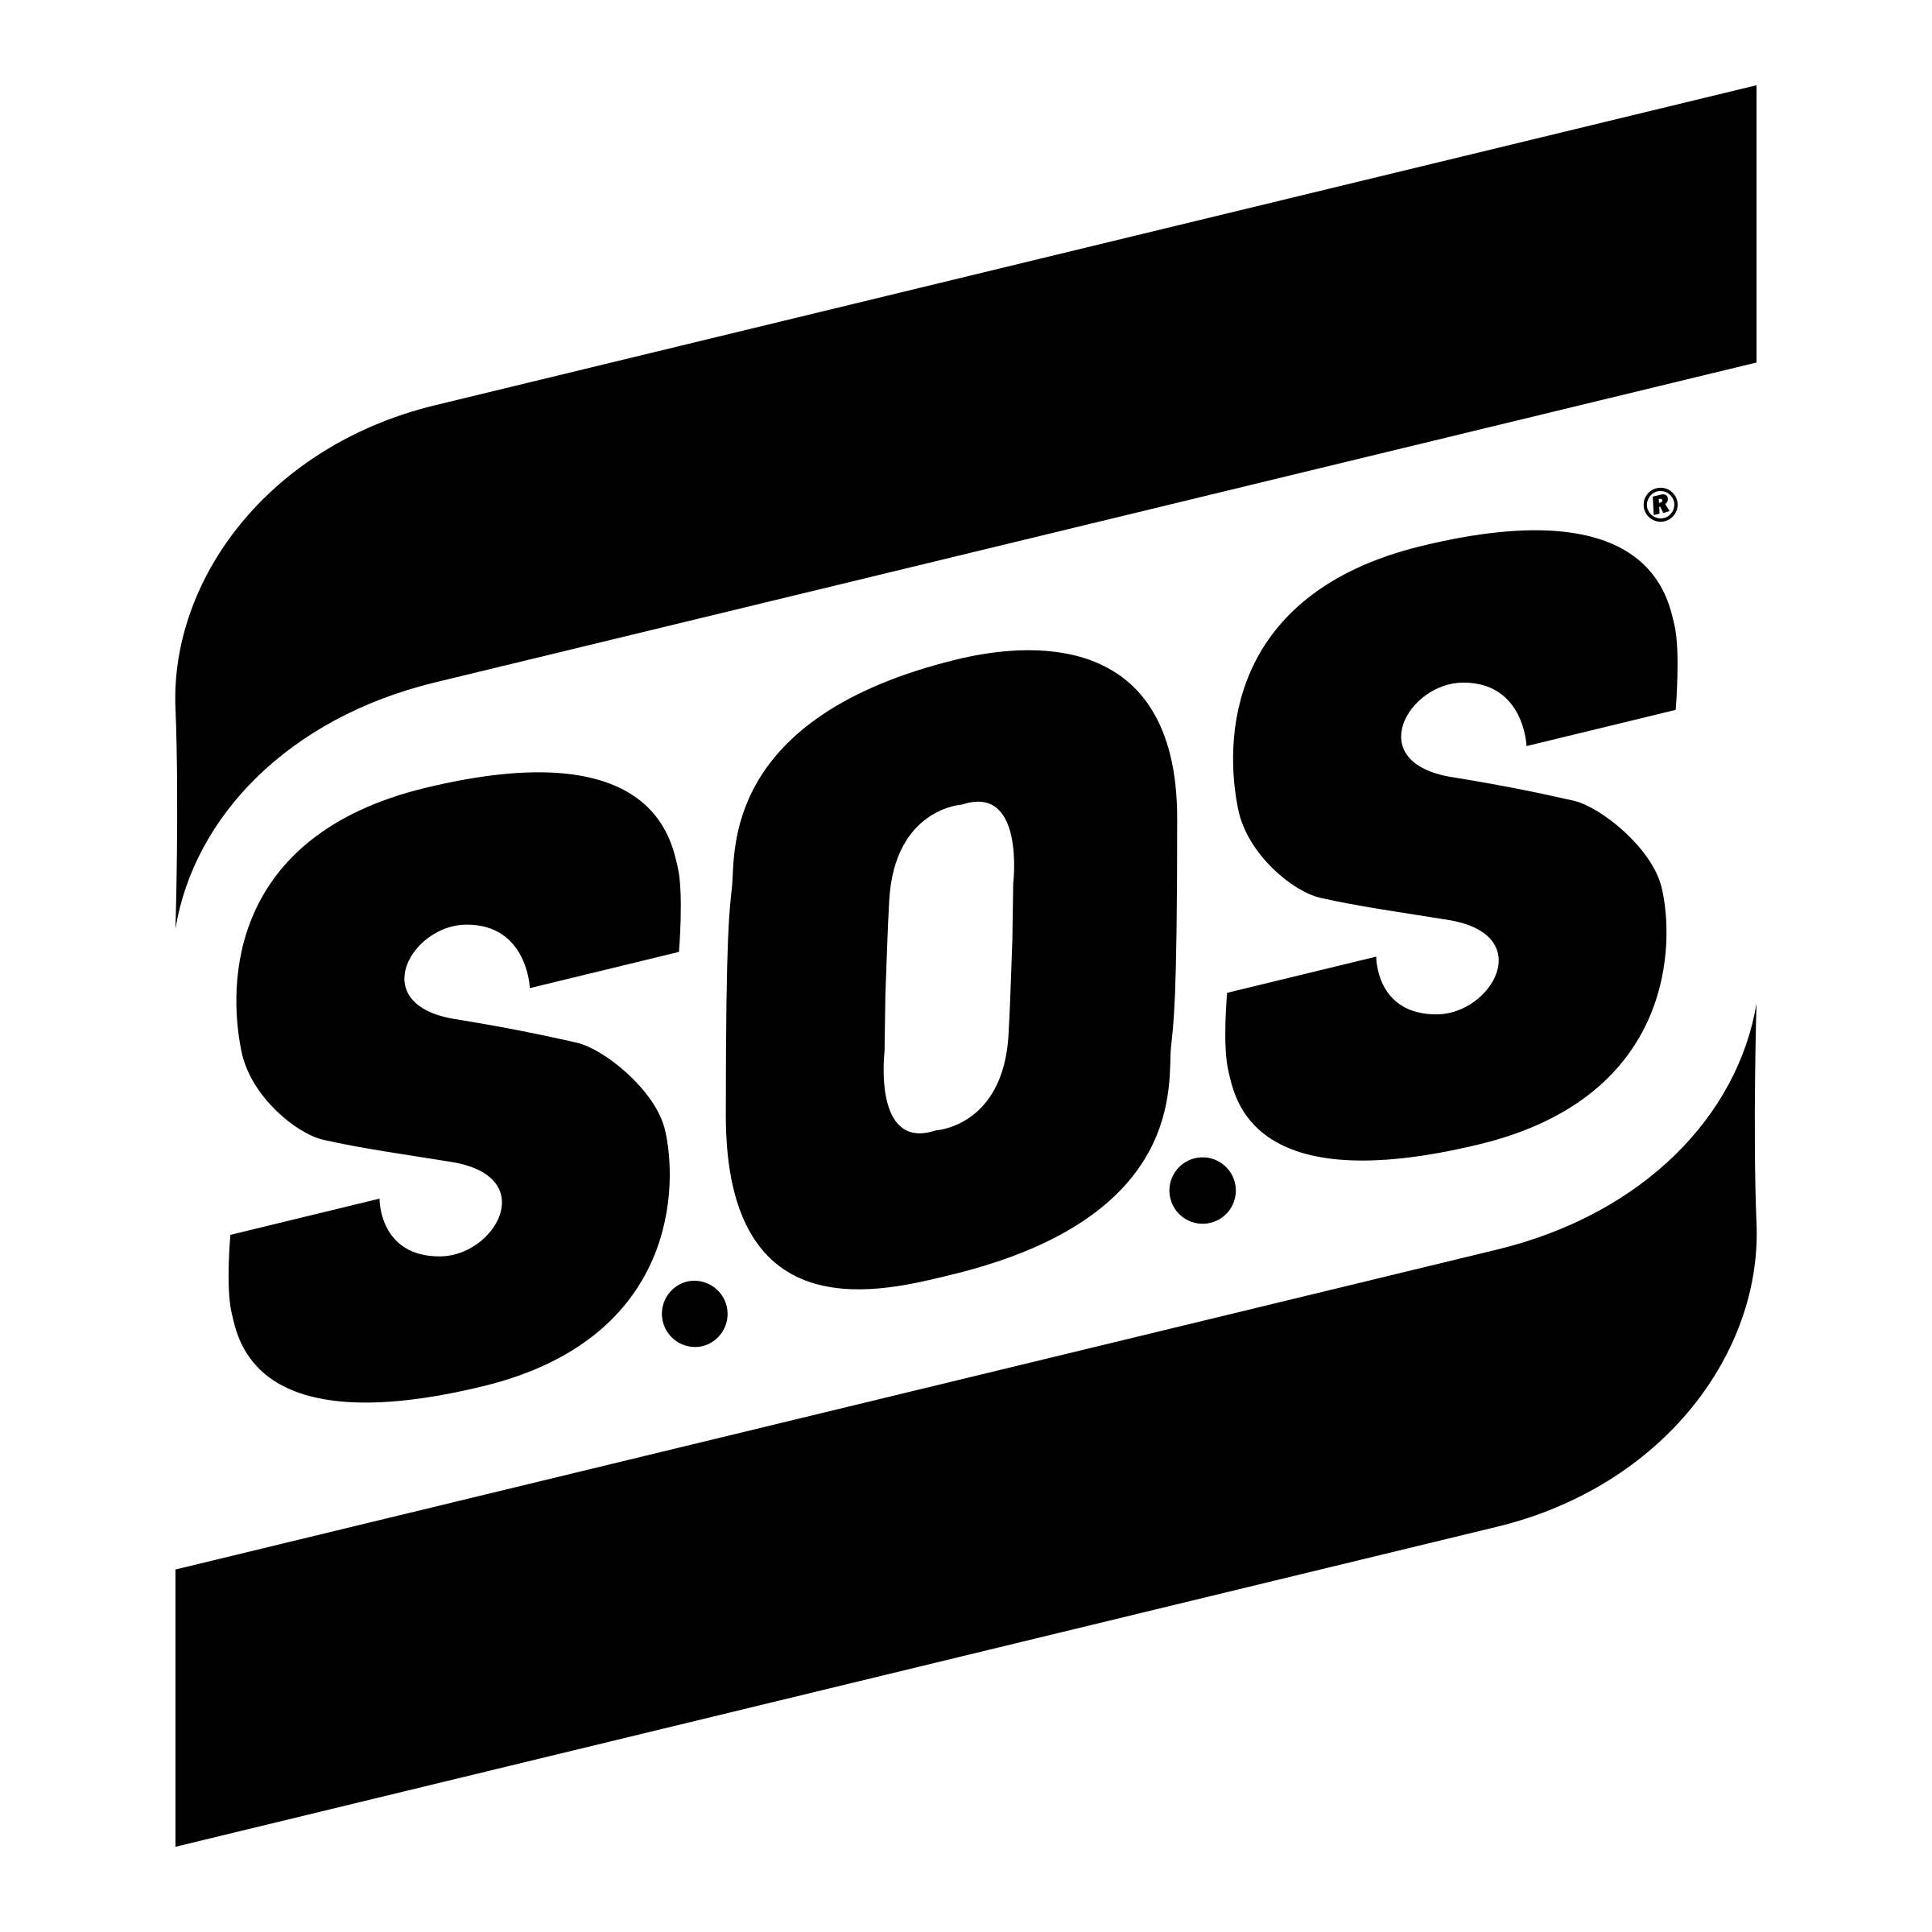 SOS Logo - SOS Logo PNG Transparent & SVG Vector - Freebie Supply